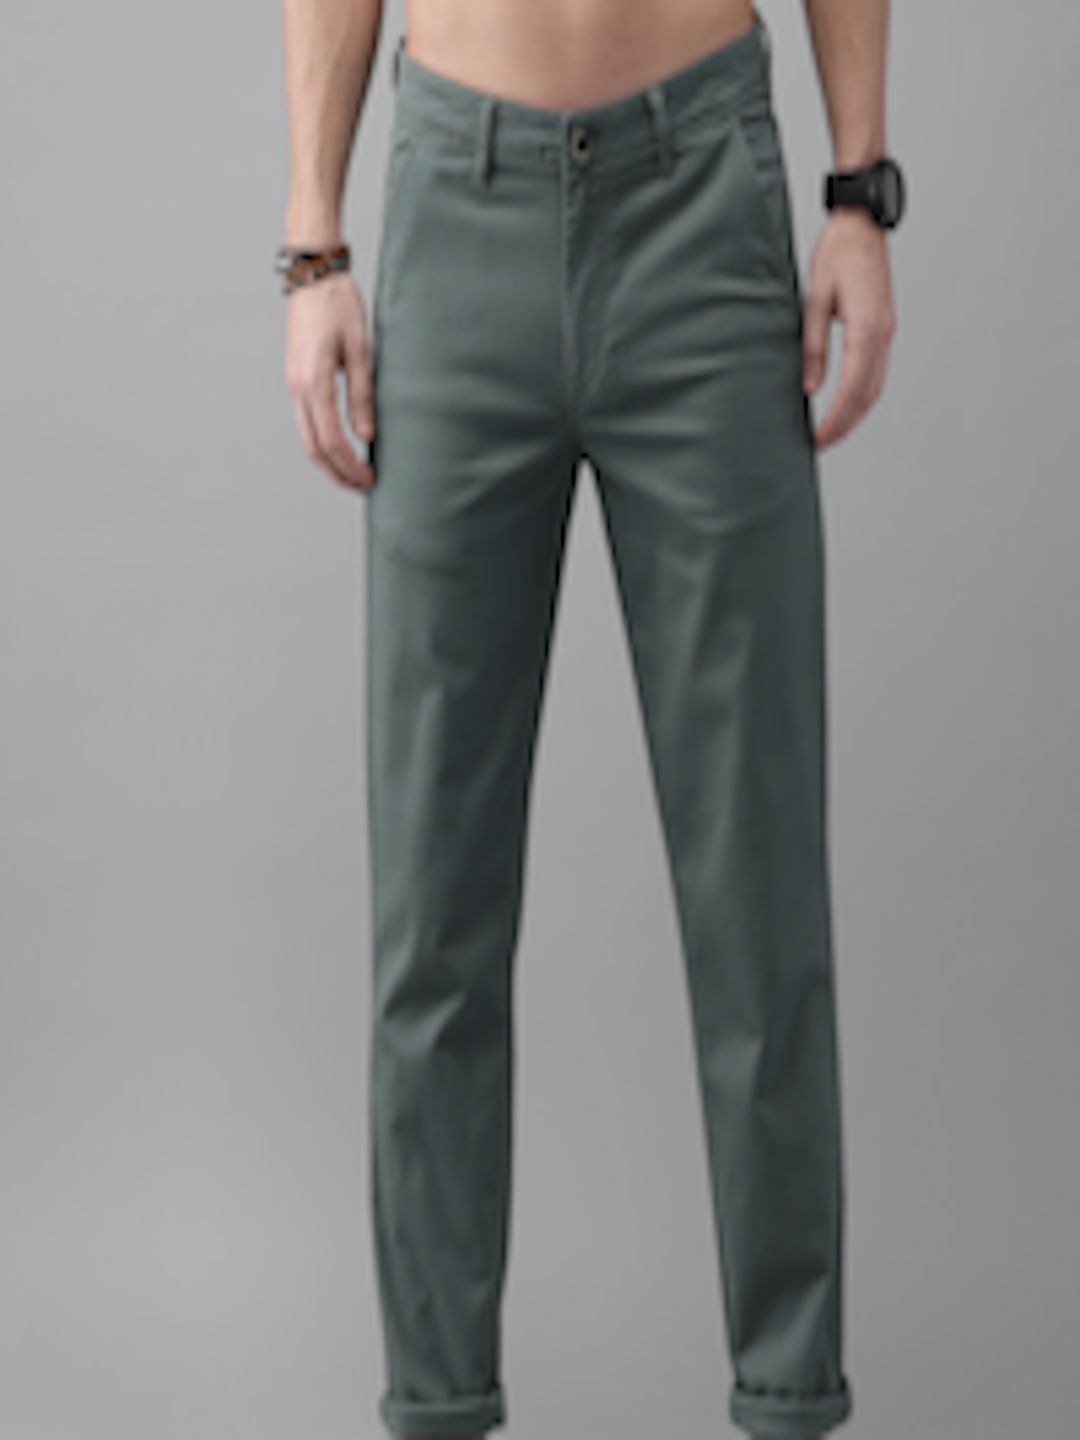 Buy Roadster Men Grey Regular Fit Solid LYCRA Fiber Chinos - Trousers ...